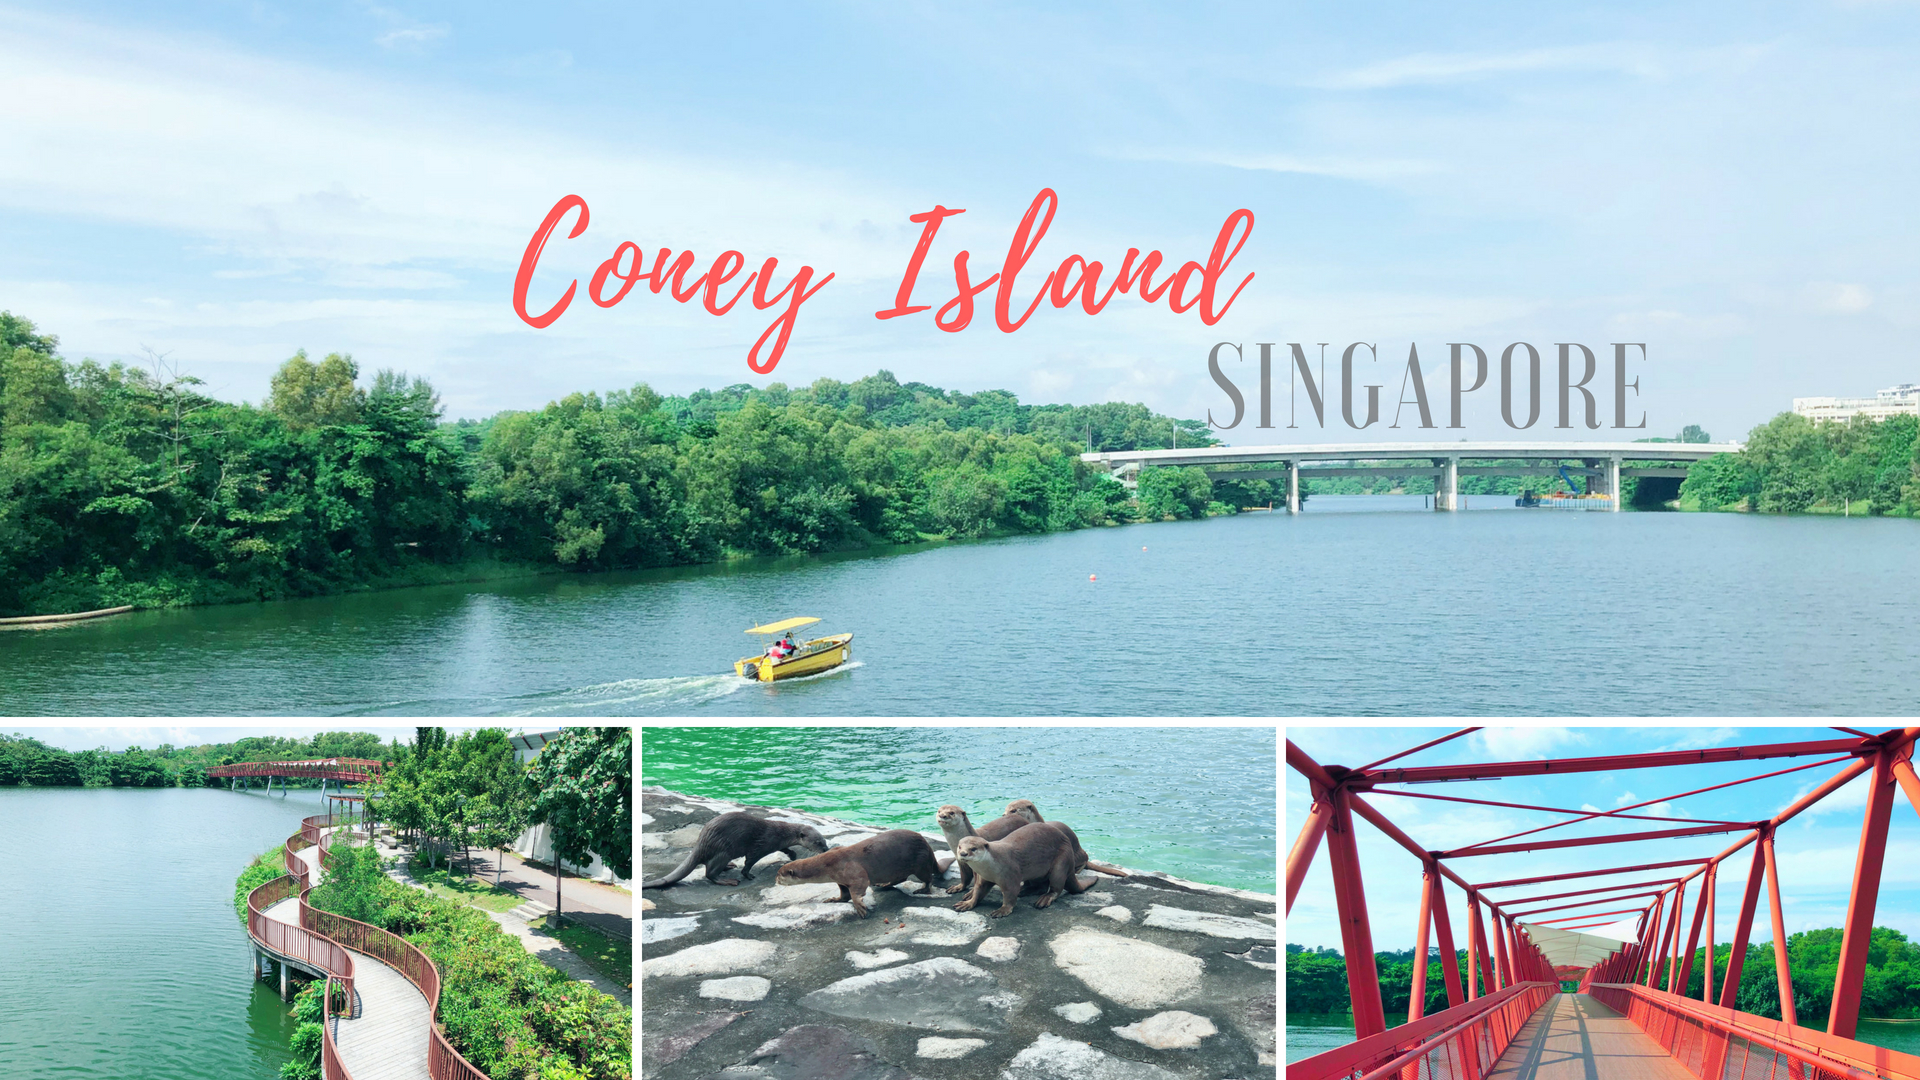 Coney Island Singapore